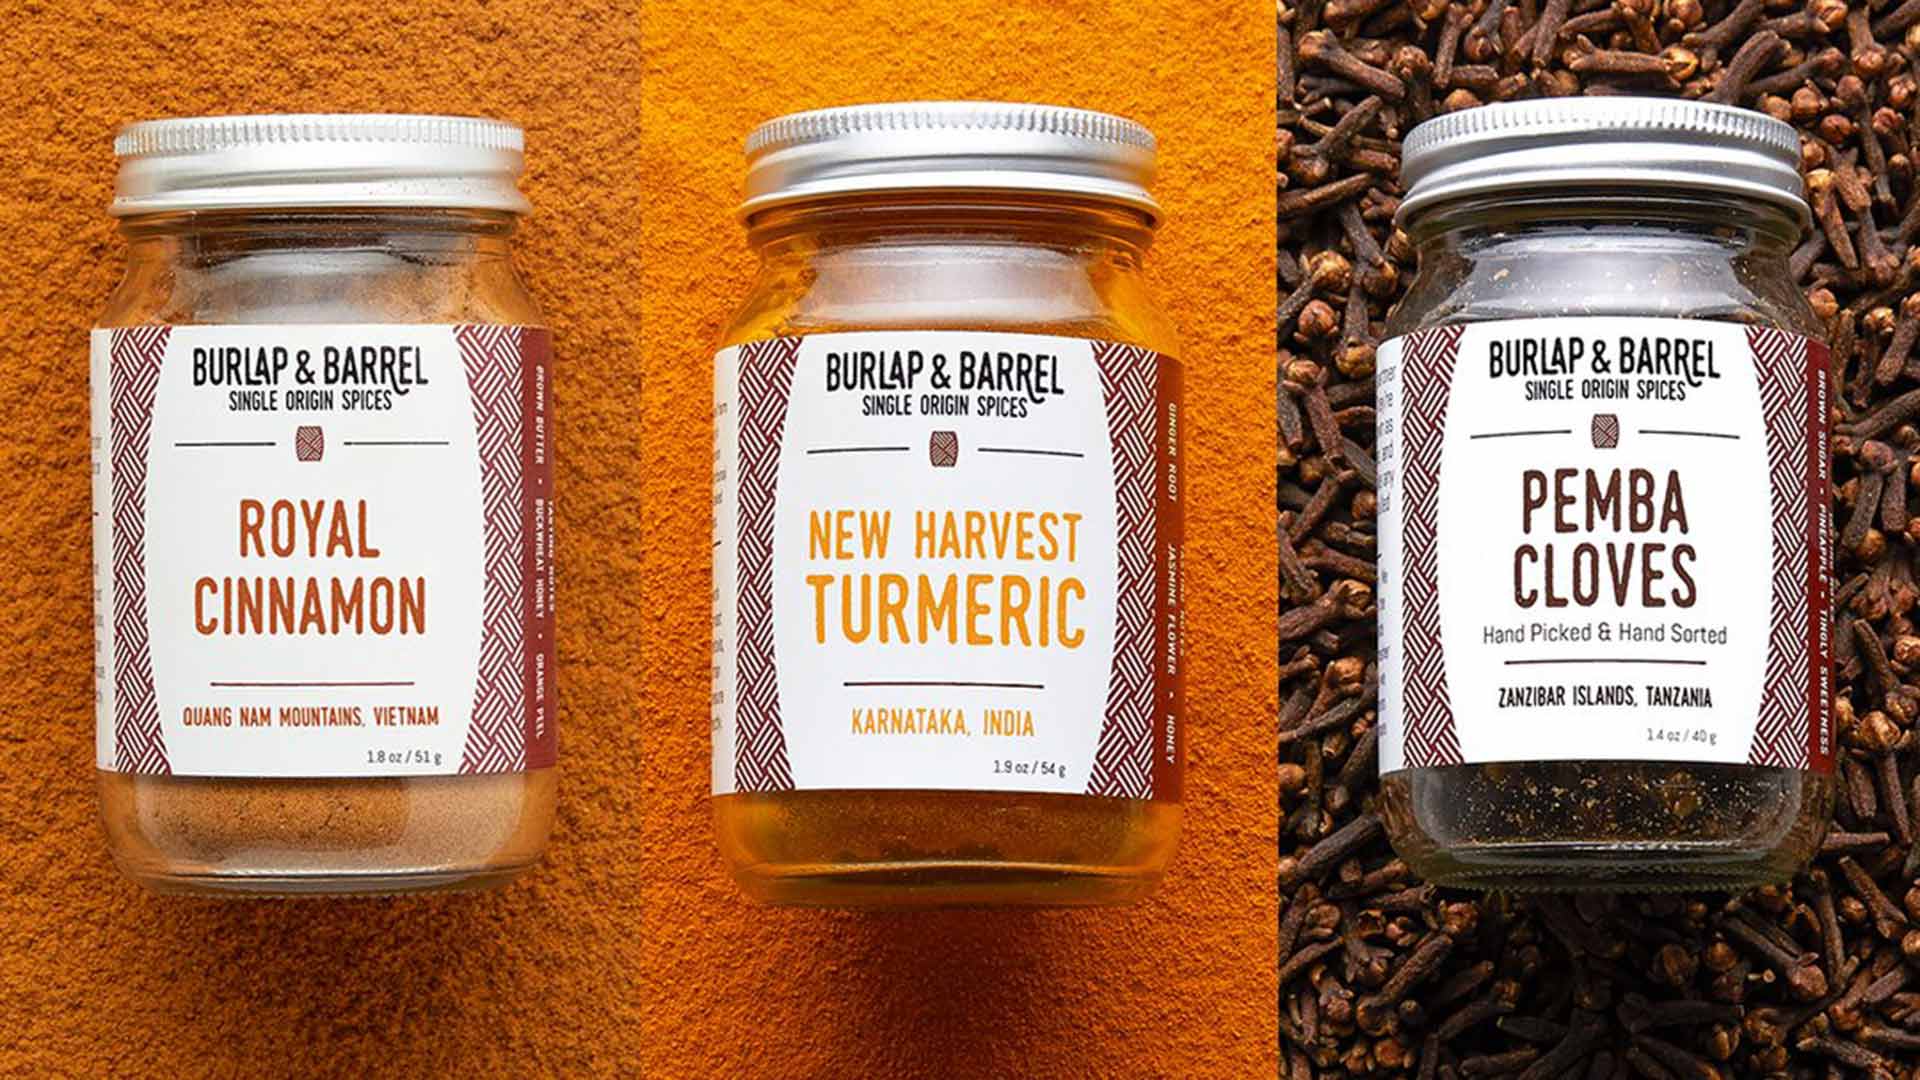 Burlap & Barrel products: Royal Cinnamon, New Harvest Turmeric, Pemba Cloves